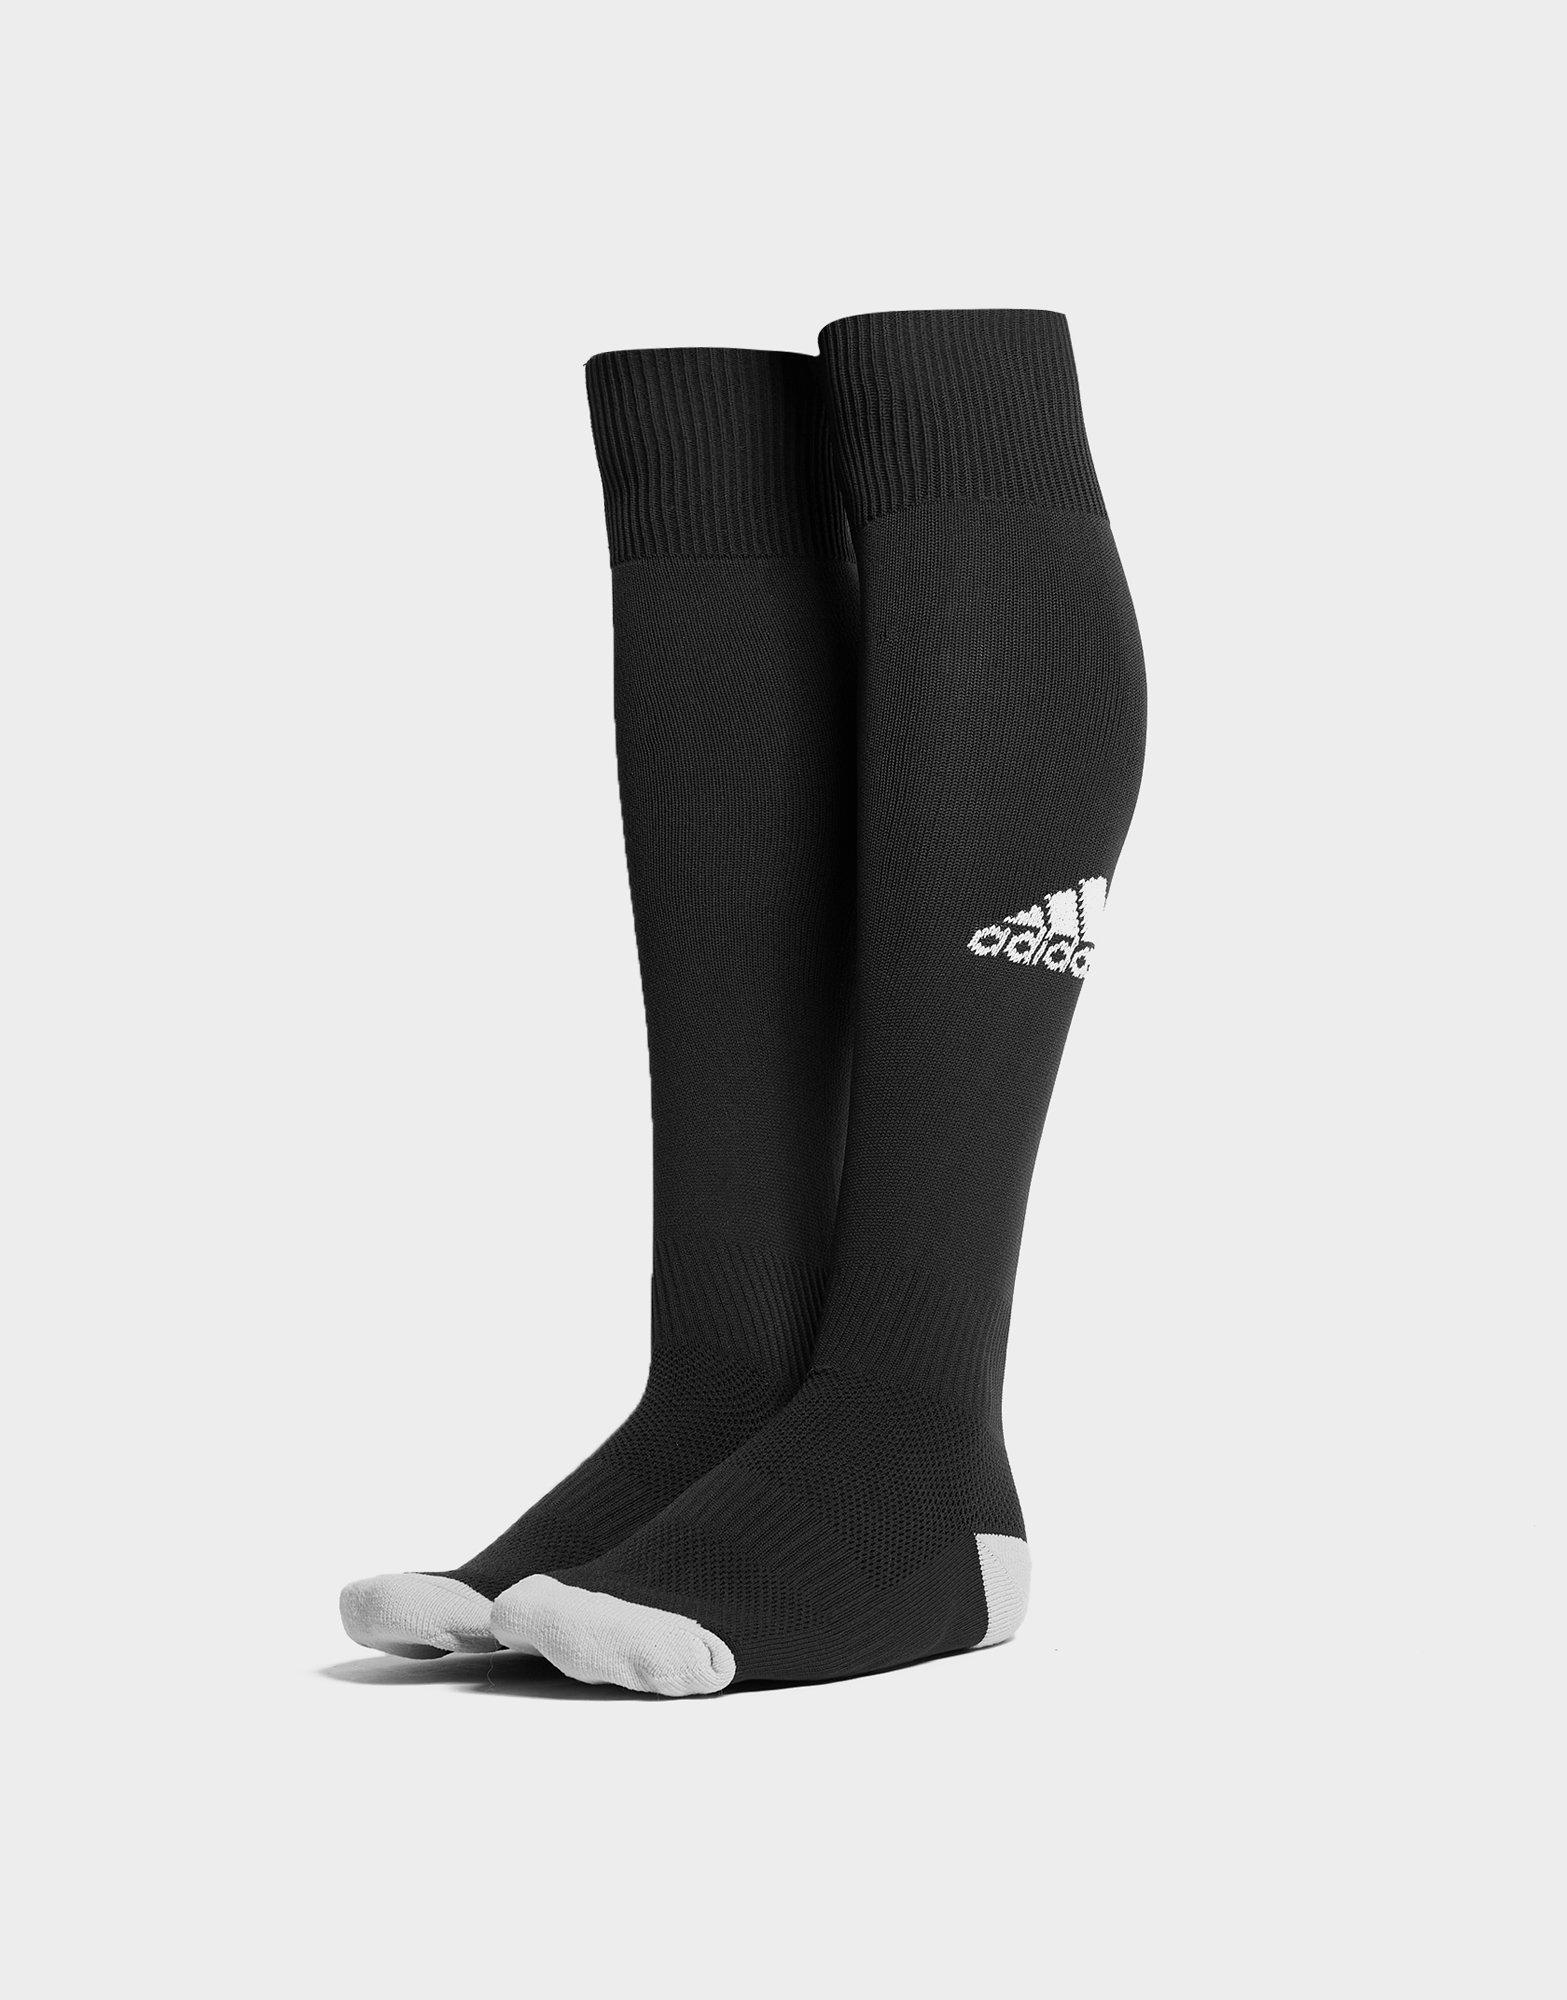 teoría Abrazadera temor Black adidas Football Socks | JD Sports Global